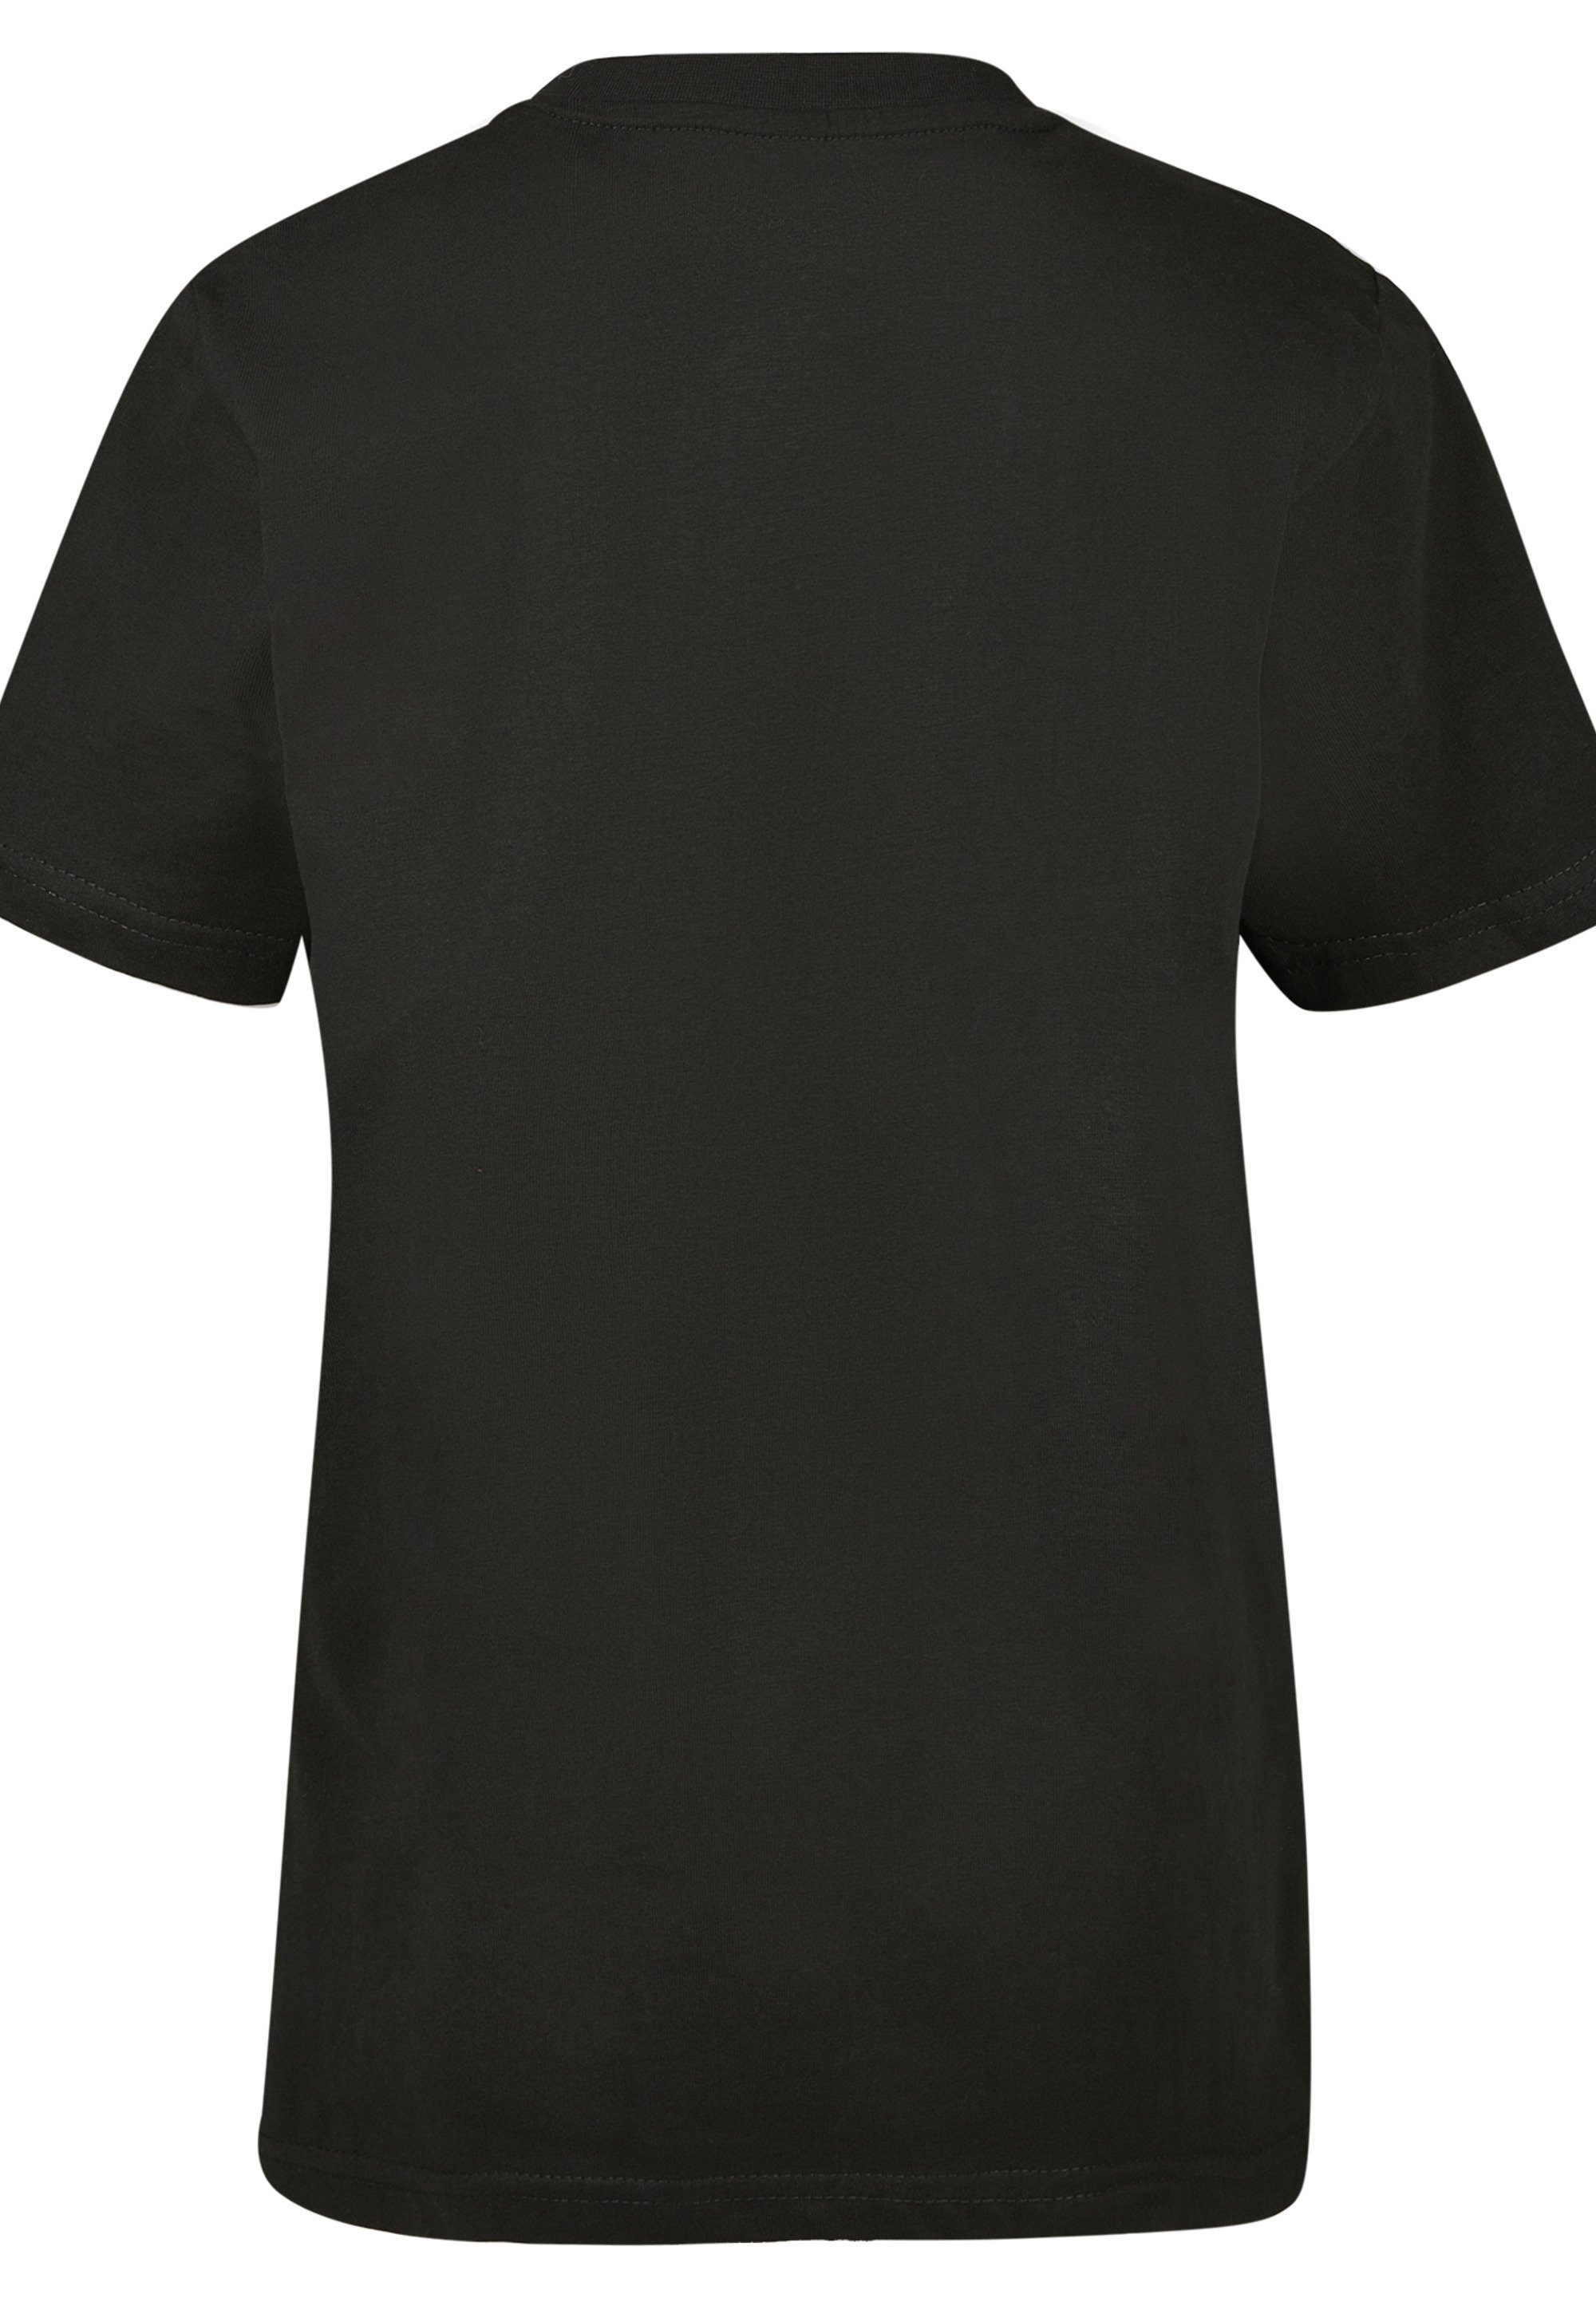 F4NT4STIC T-Shirt Print F4NT4STIC Unisex Kinder,Premium T-Shirt Merch,Jungen,Mädchen,Logo